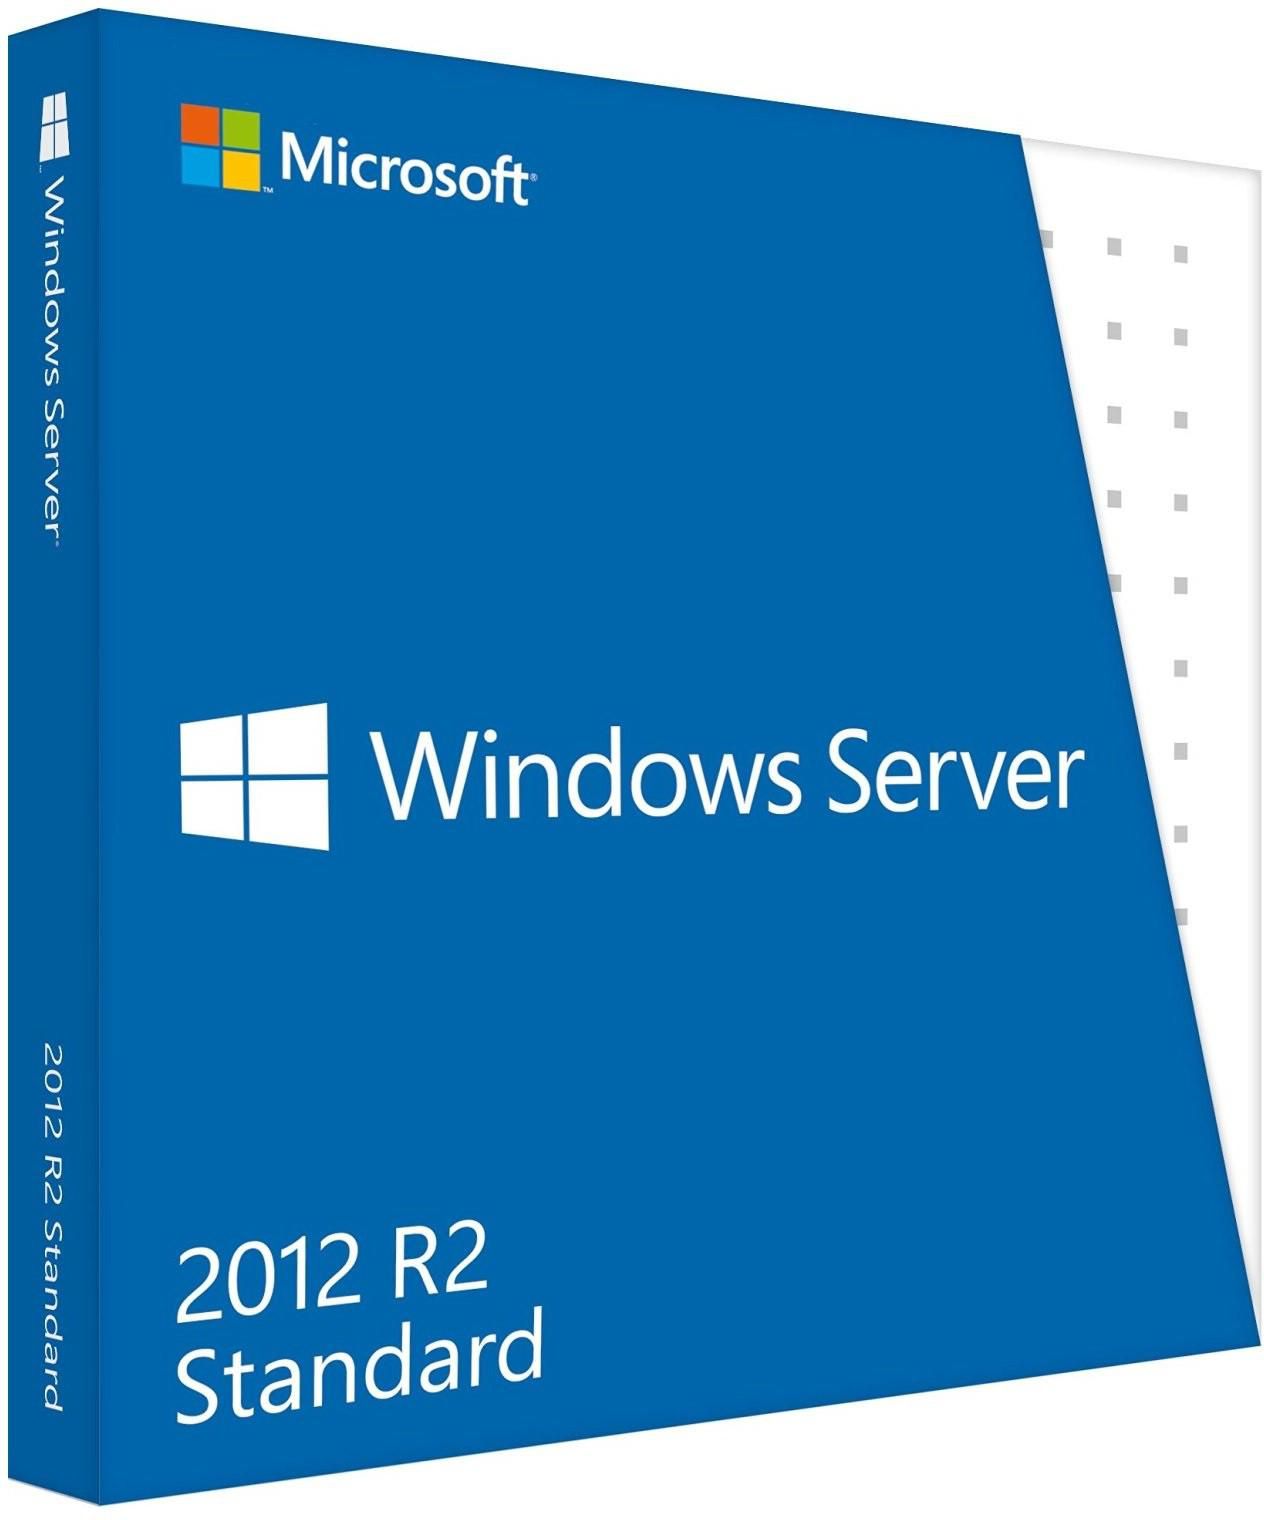 Microsoft Windows Server 2012 R2 Standard for 1 Device